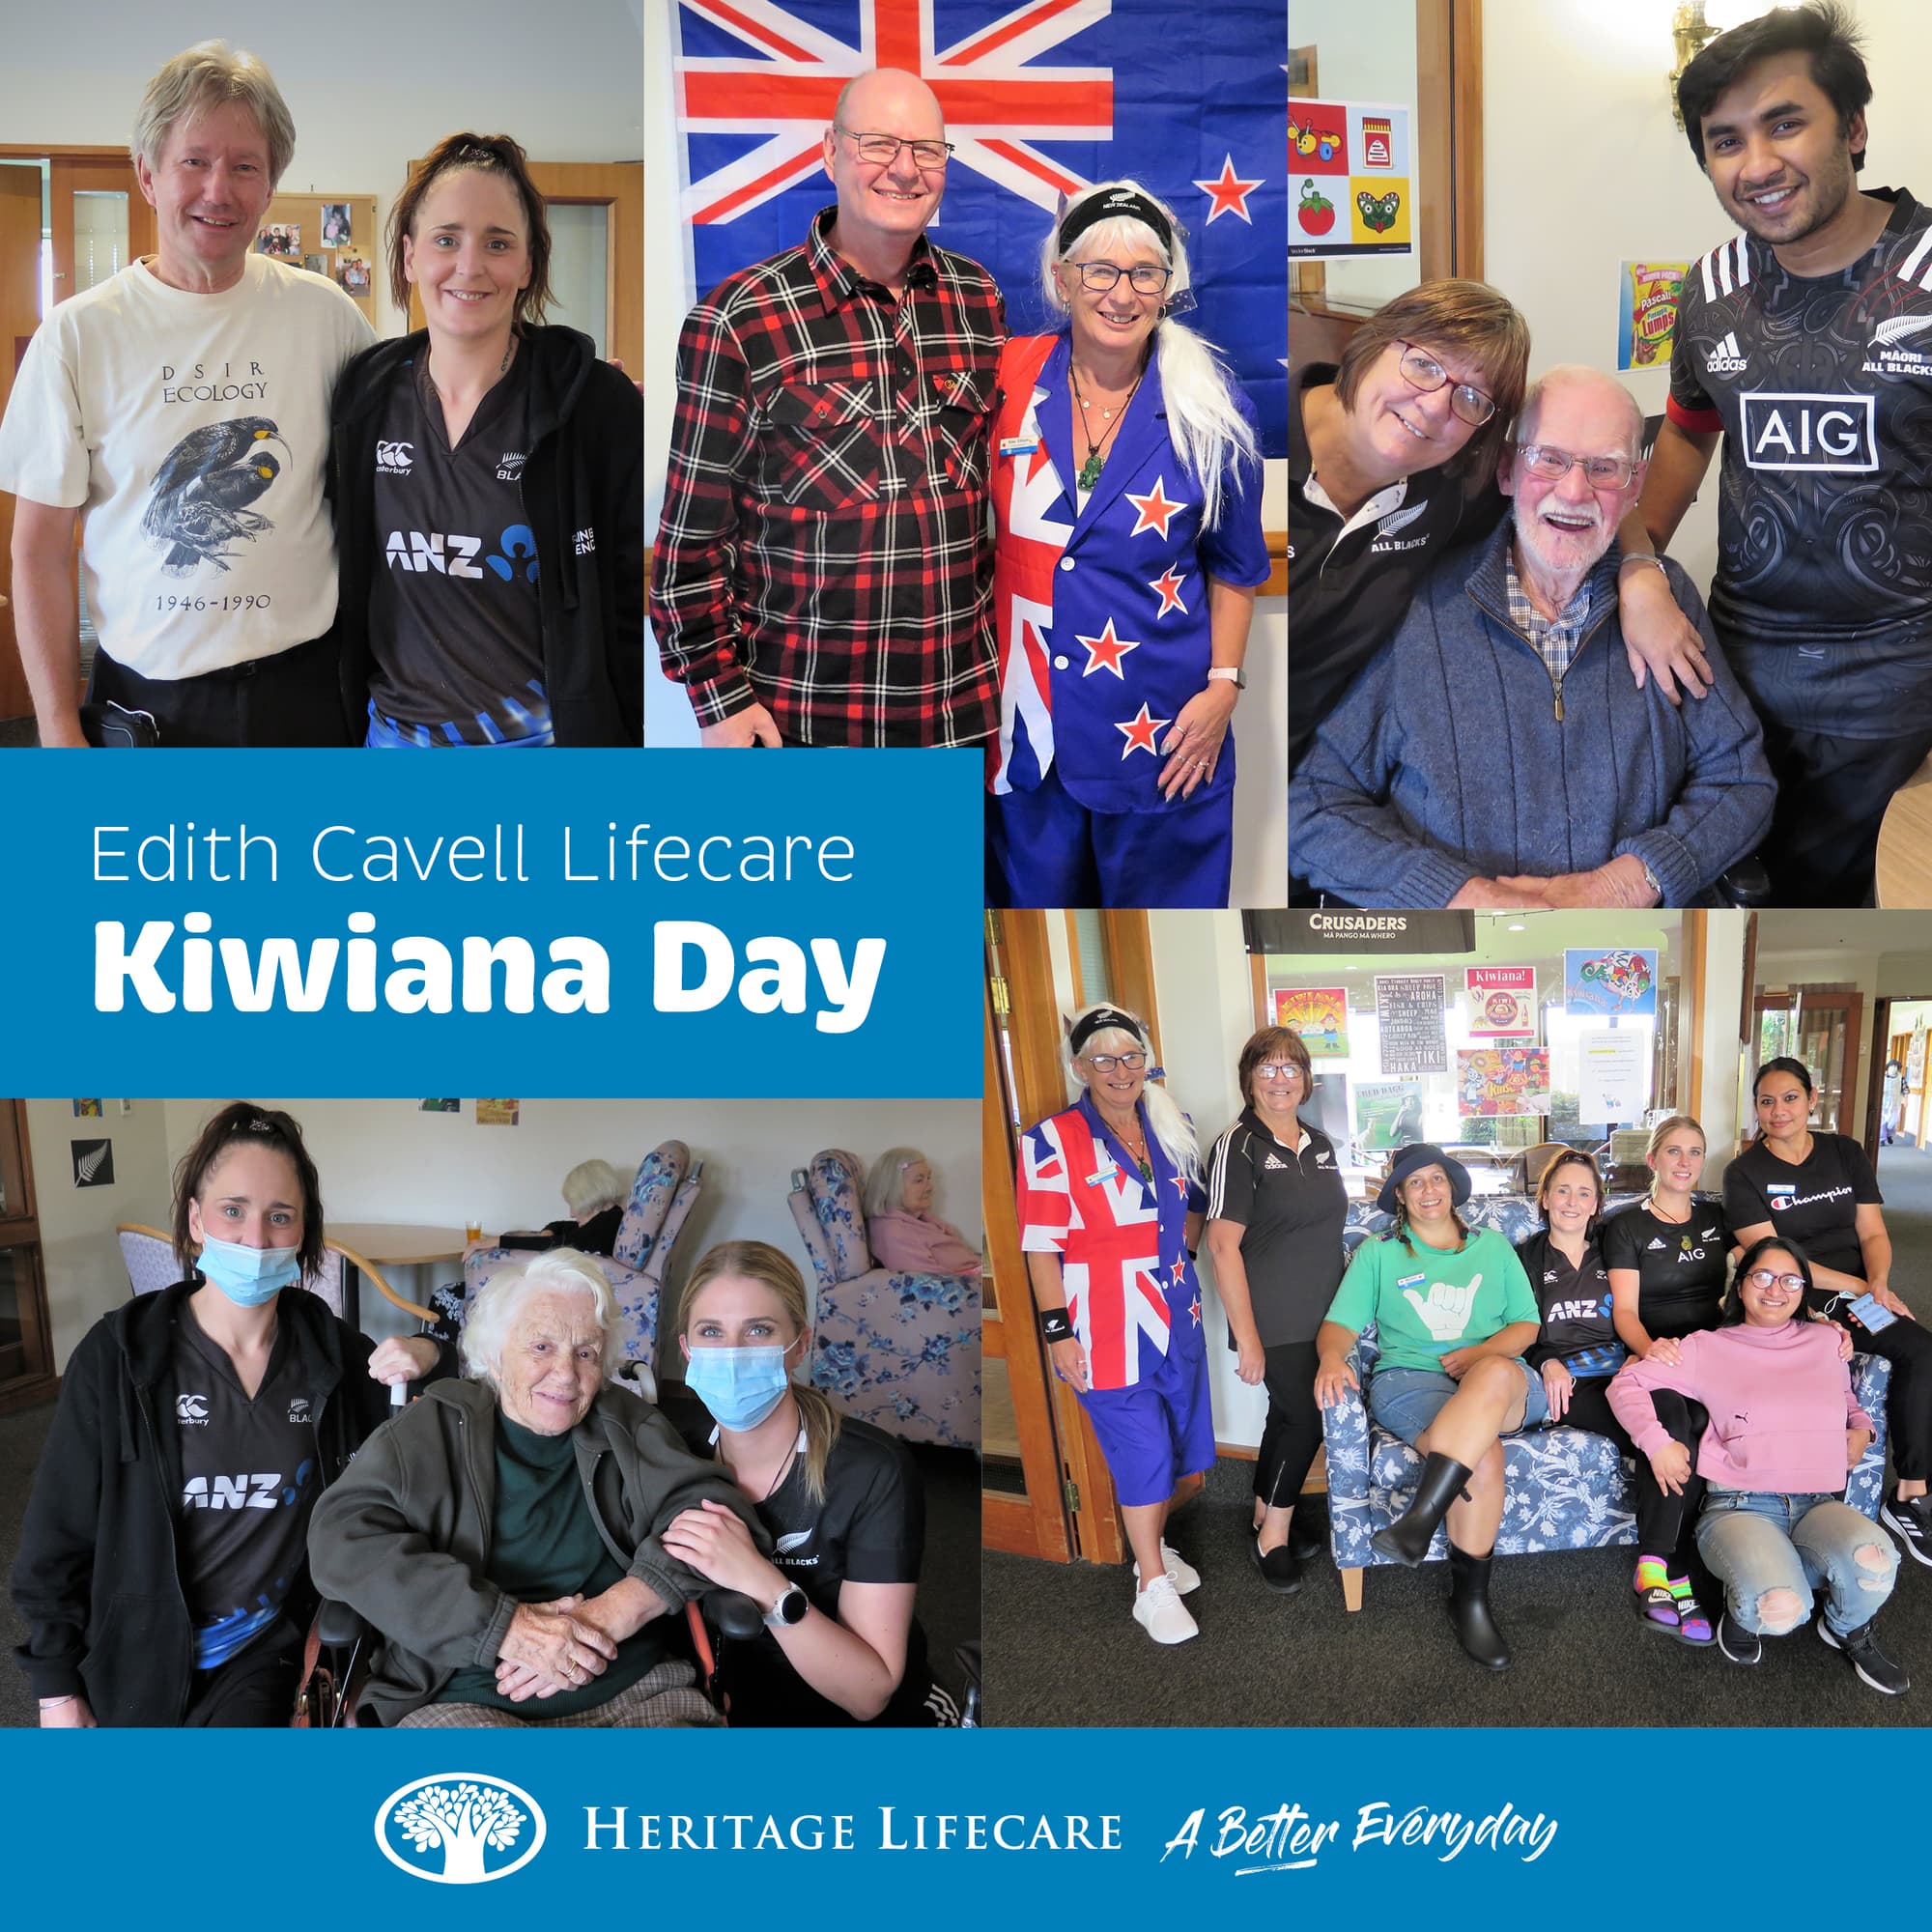 Kiwiana Day at Edith Cavell